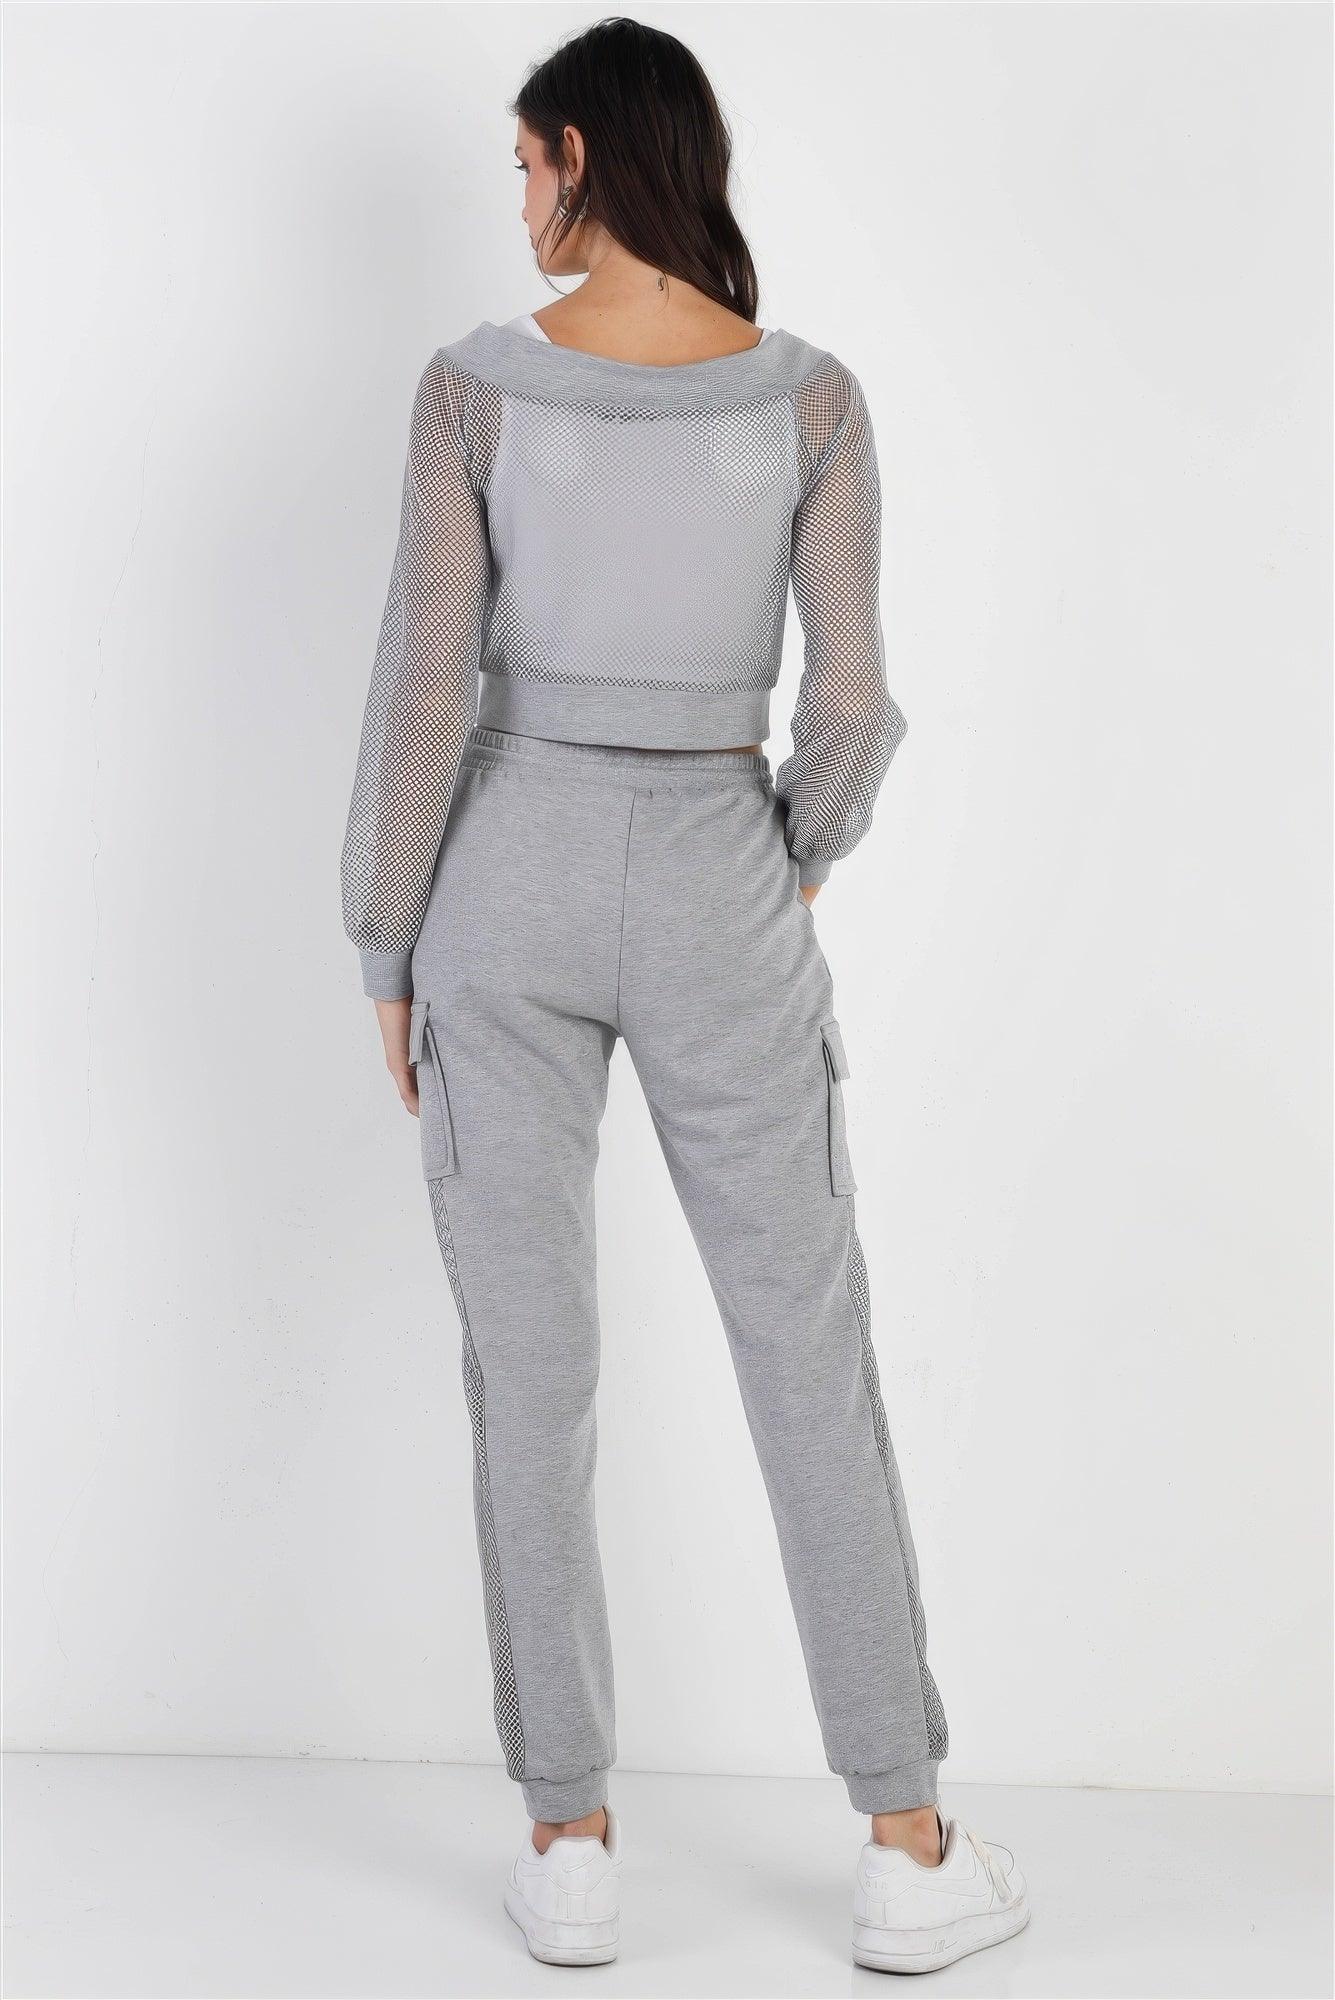 Heather Grey Contrast Fishnet Zip-up Top & Pants Set - AMIClubwear